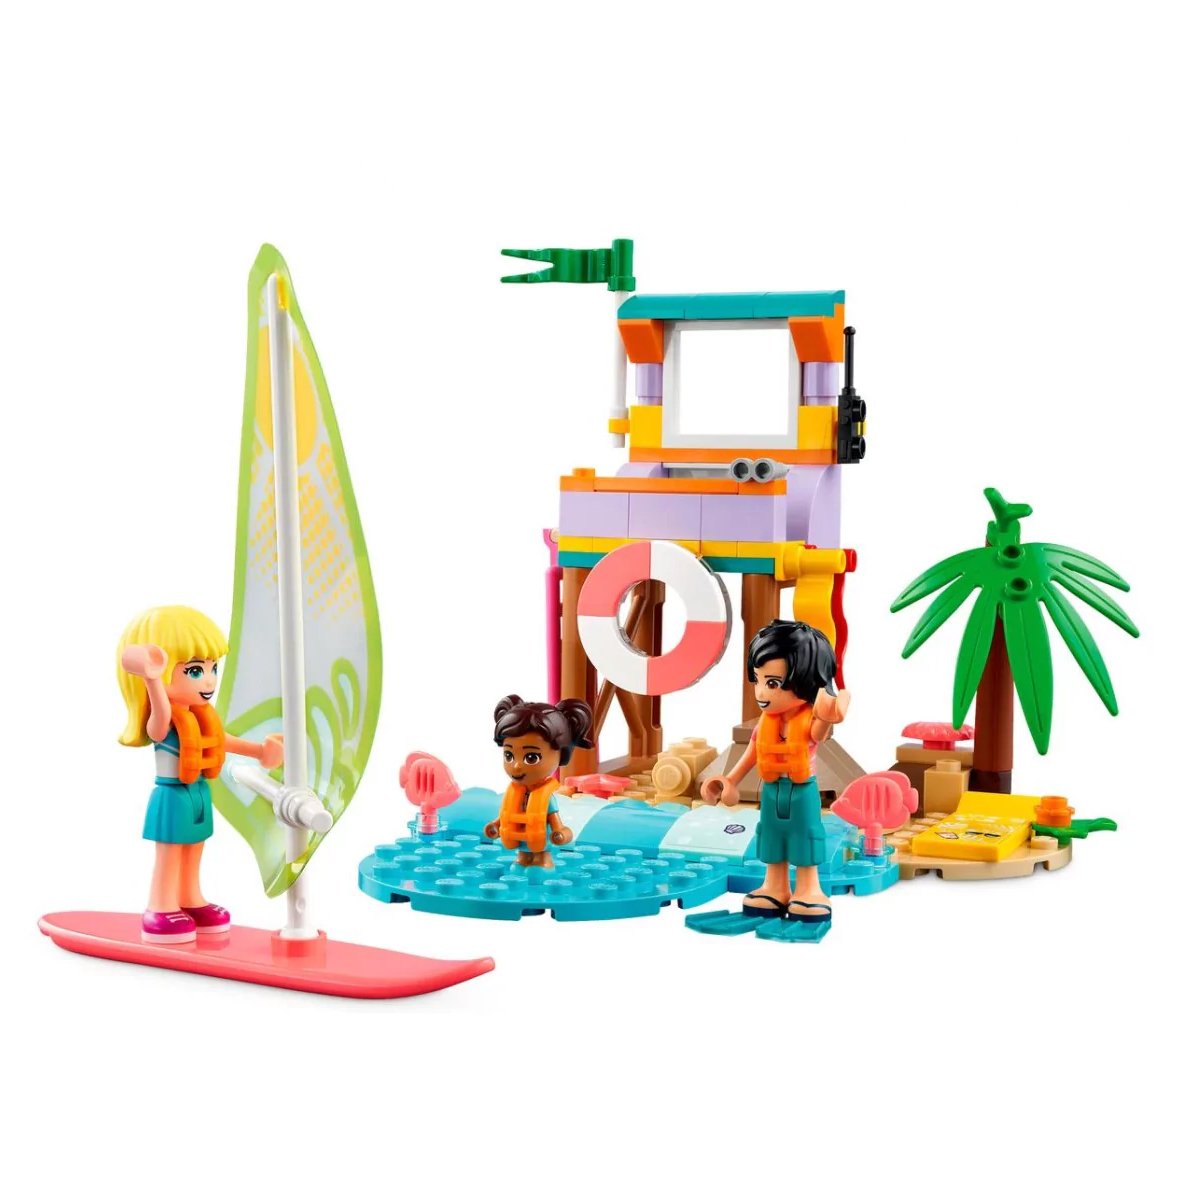 Lego Friends 41710 Sörfçü Plaj Eğlencesi, 288 parça +6yaş